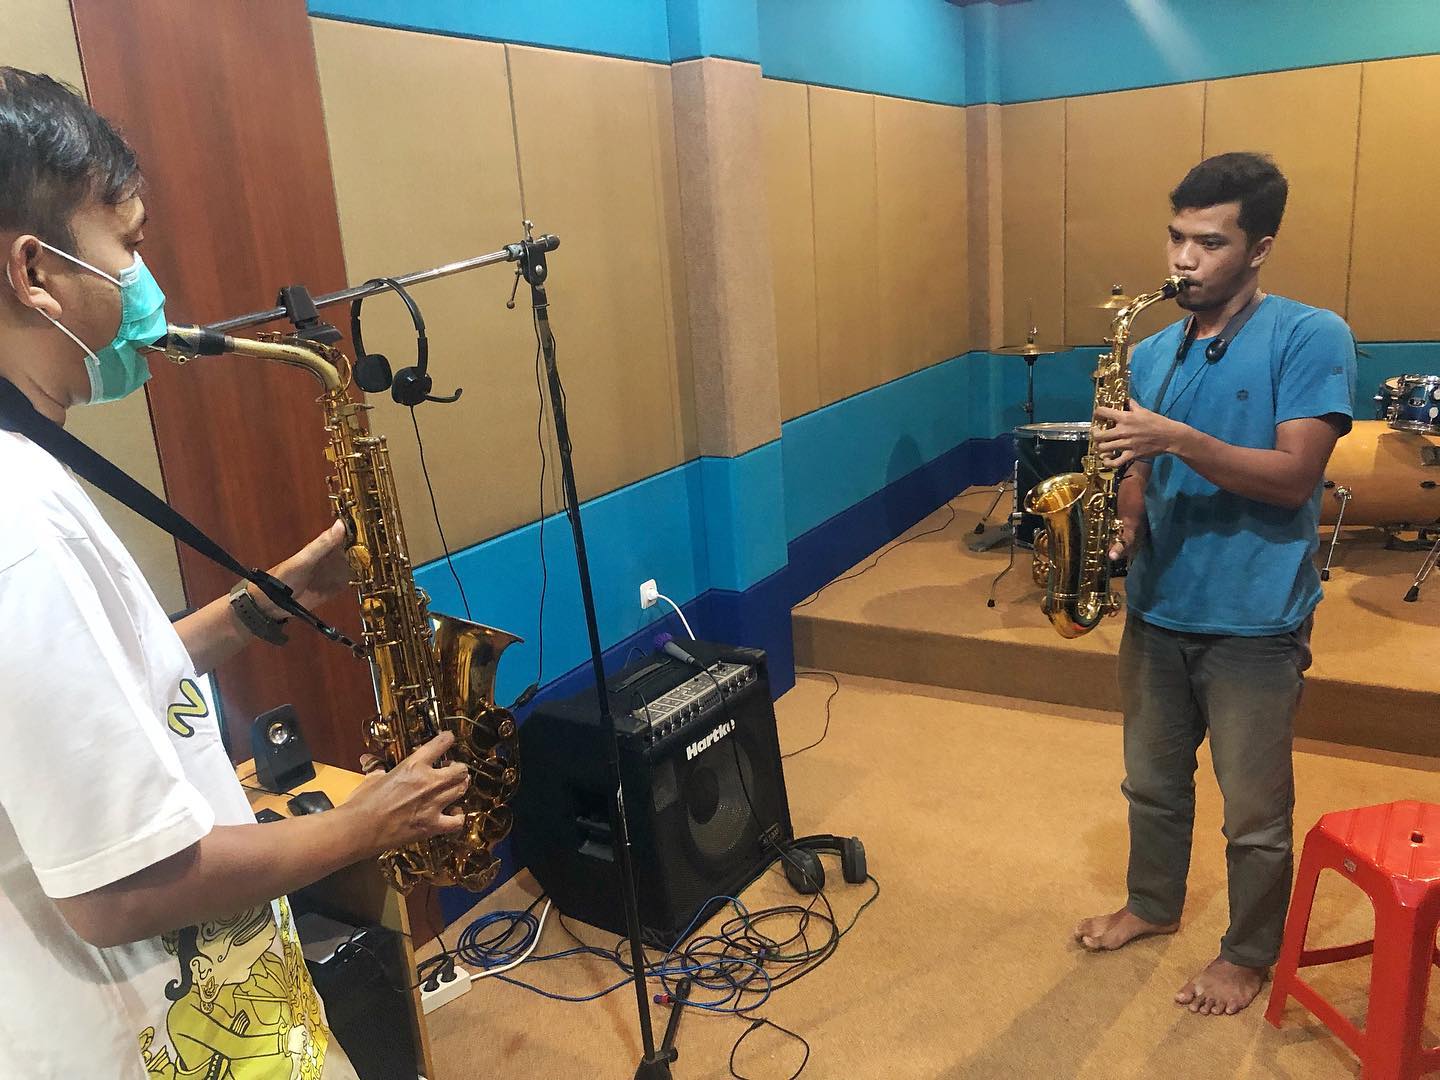 Kursus Saxophone Jogja: Cara Memainkan Saxophone dengan Ahli Musik yang Berpengalaman